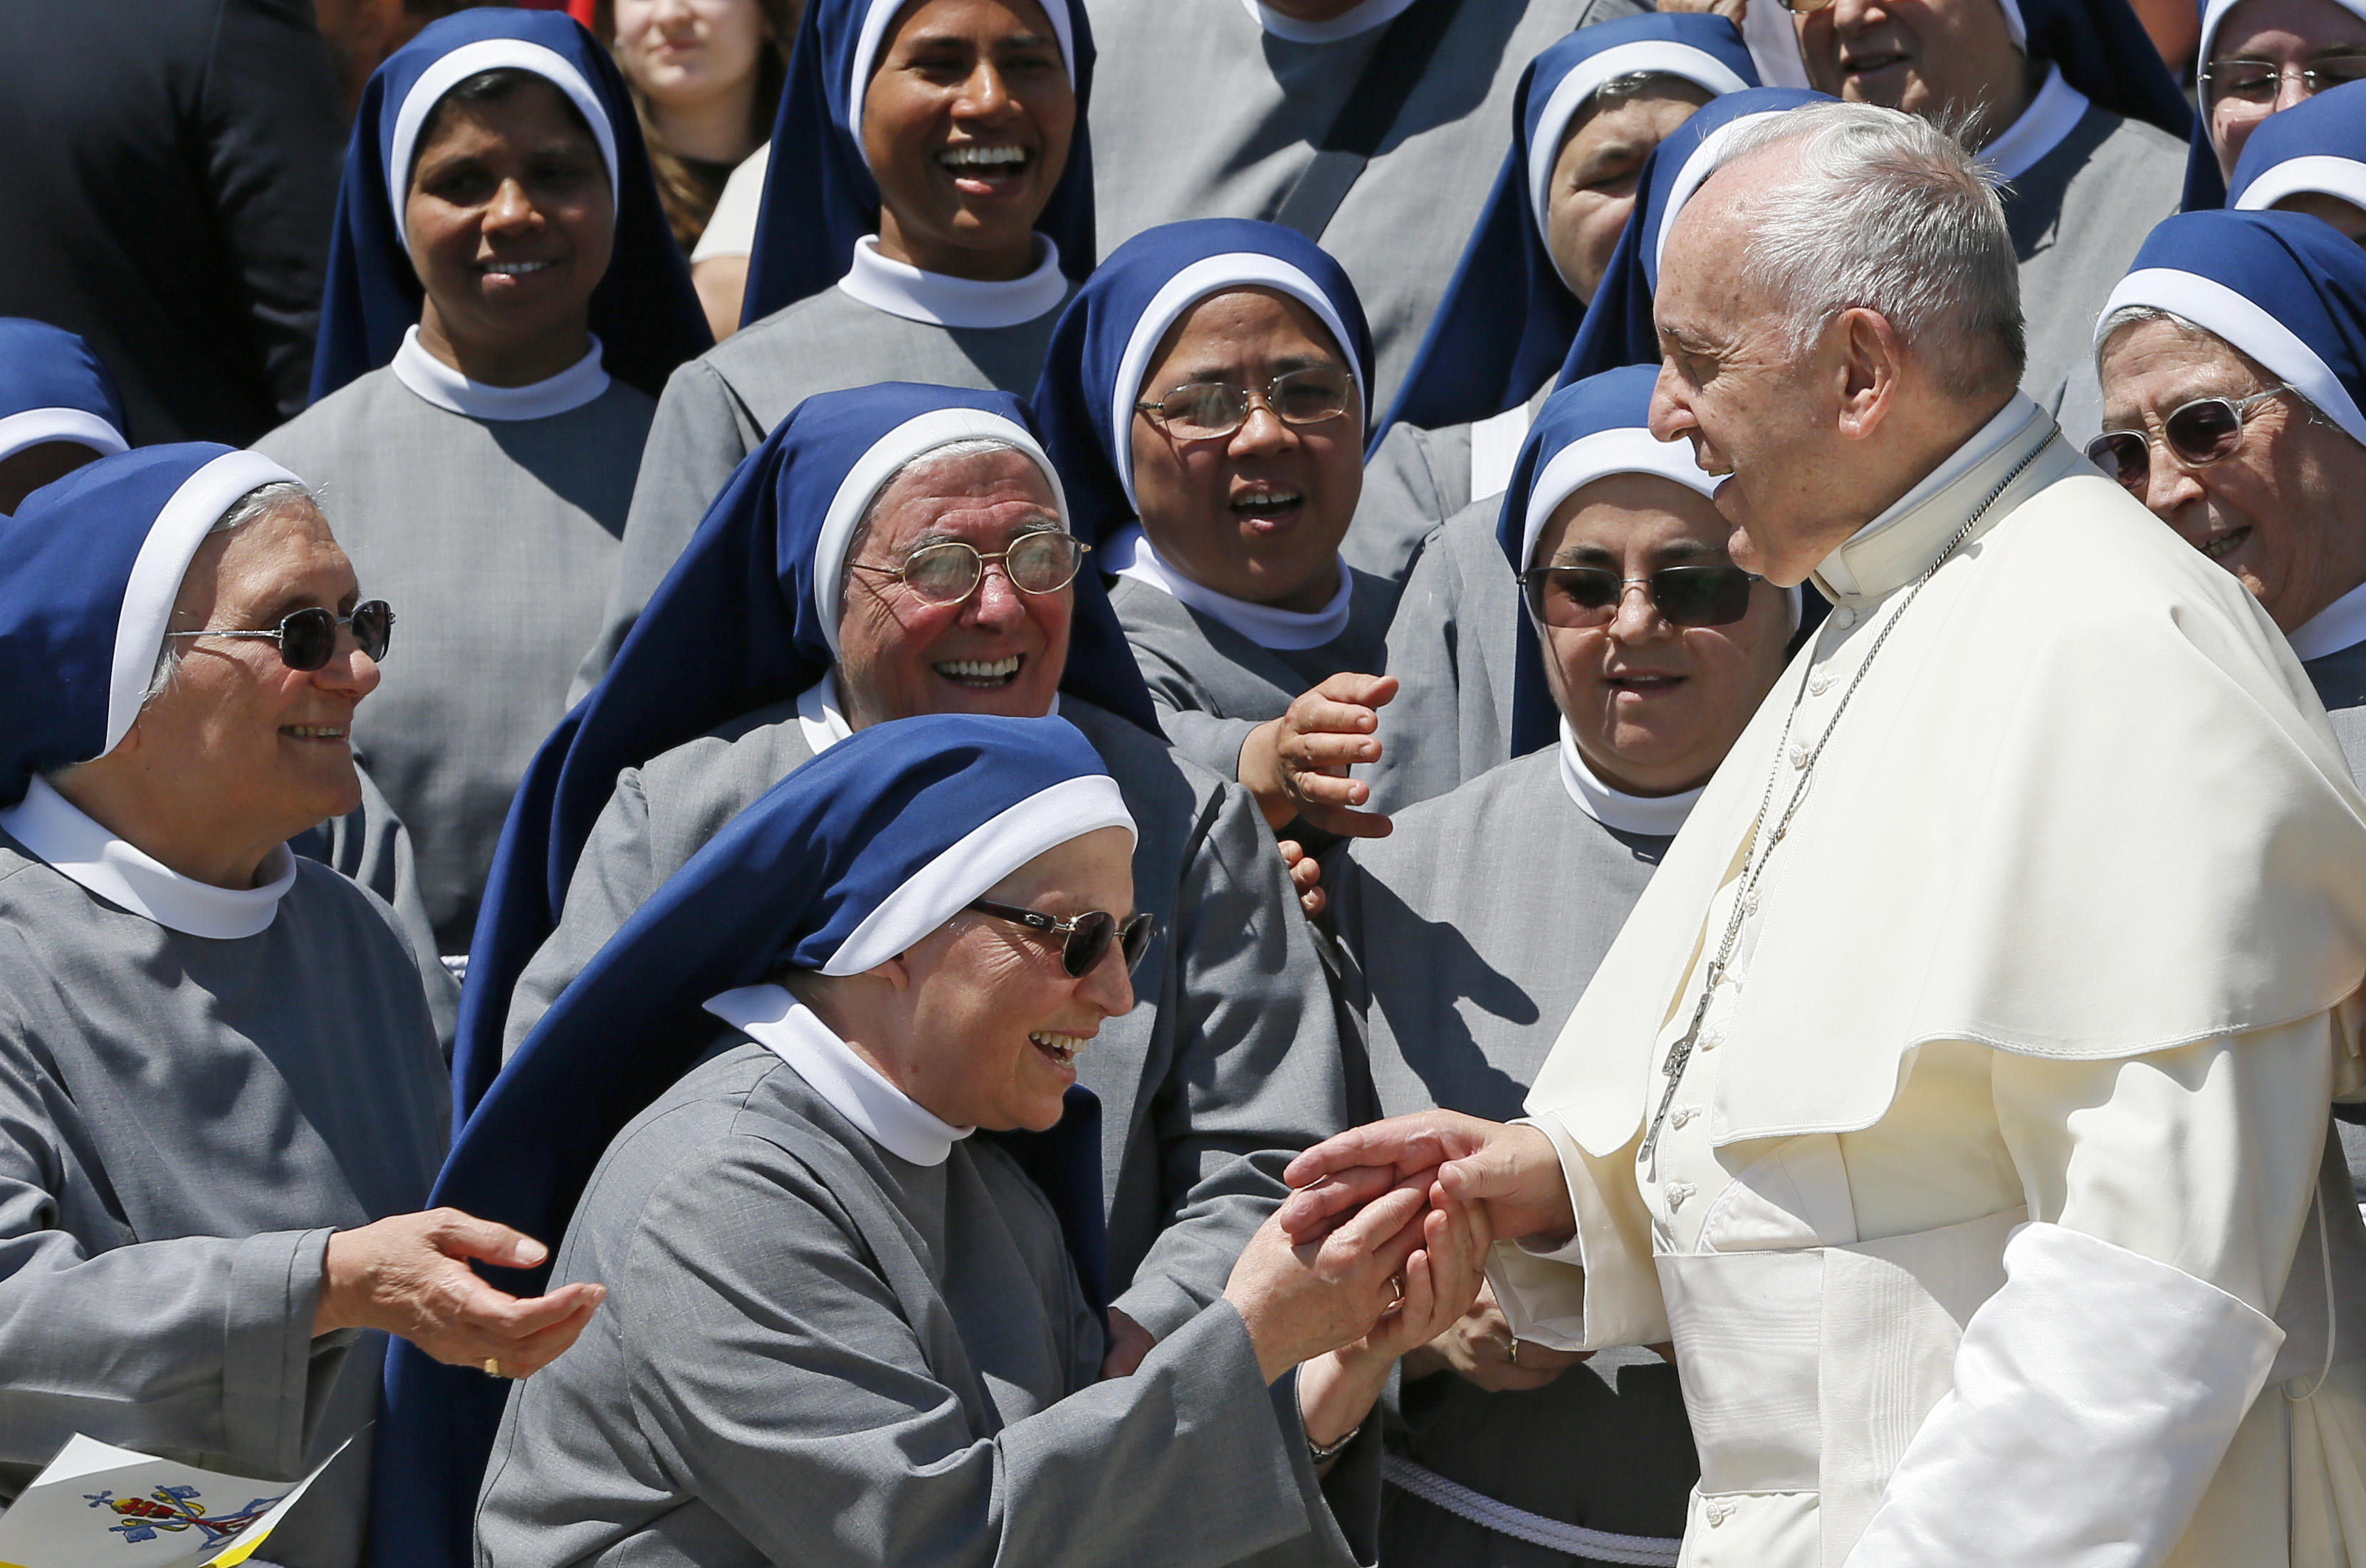 Faith is lived with joyous gratitude, not slave like duty, pope says